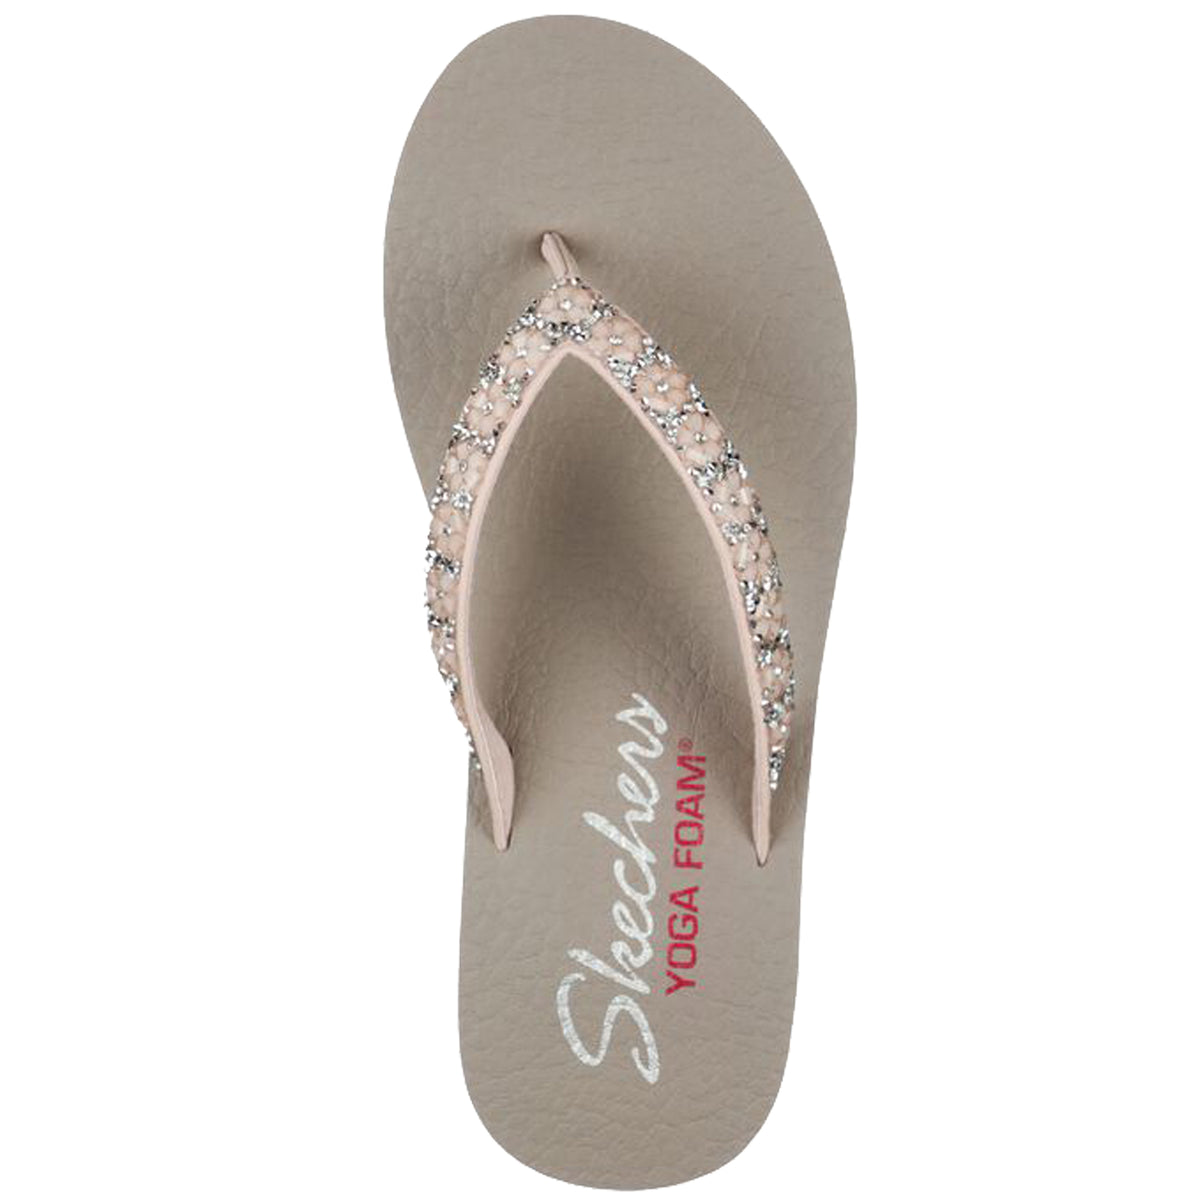 Skechers Women's 31559 Meditation Delight Yoga Foam Sandal – That Shoe Store and More